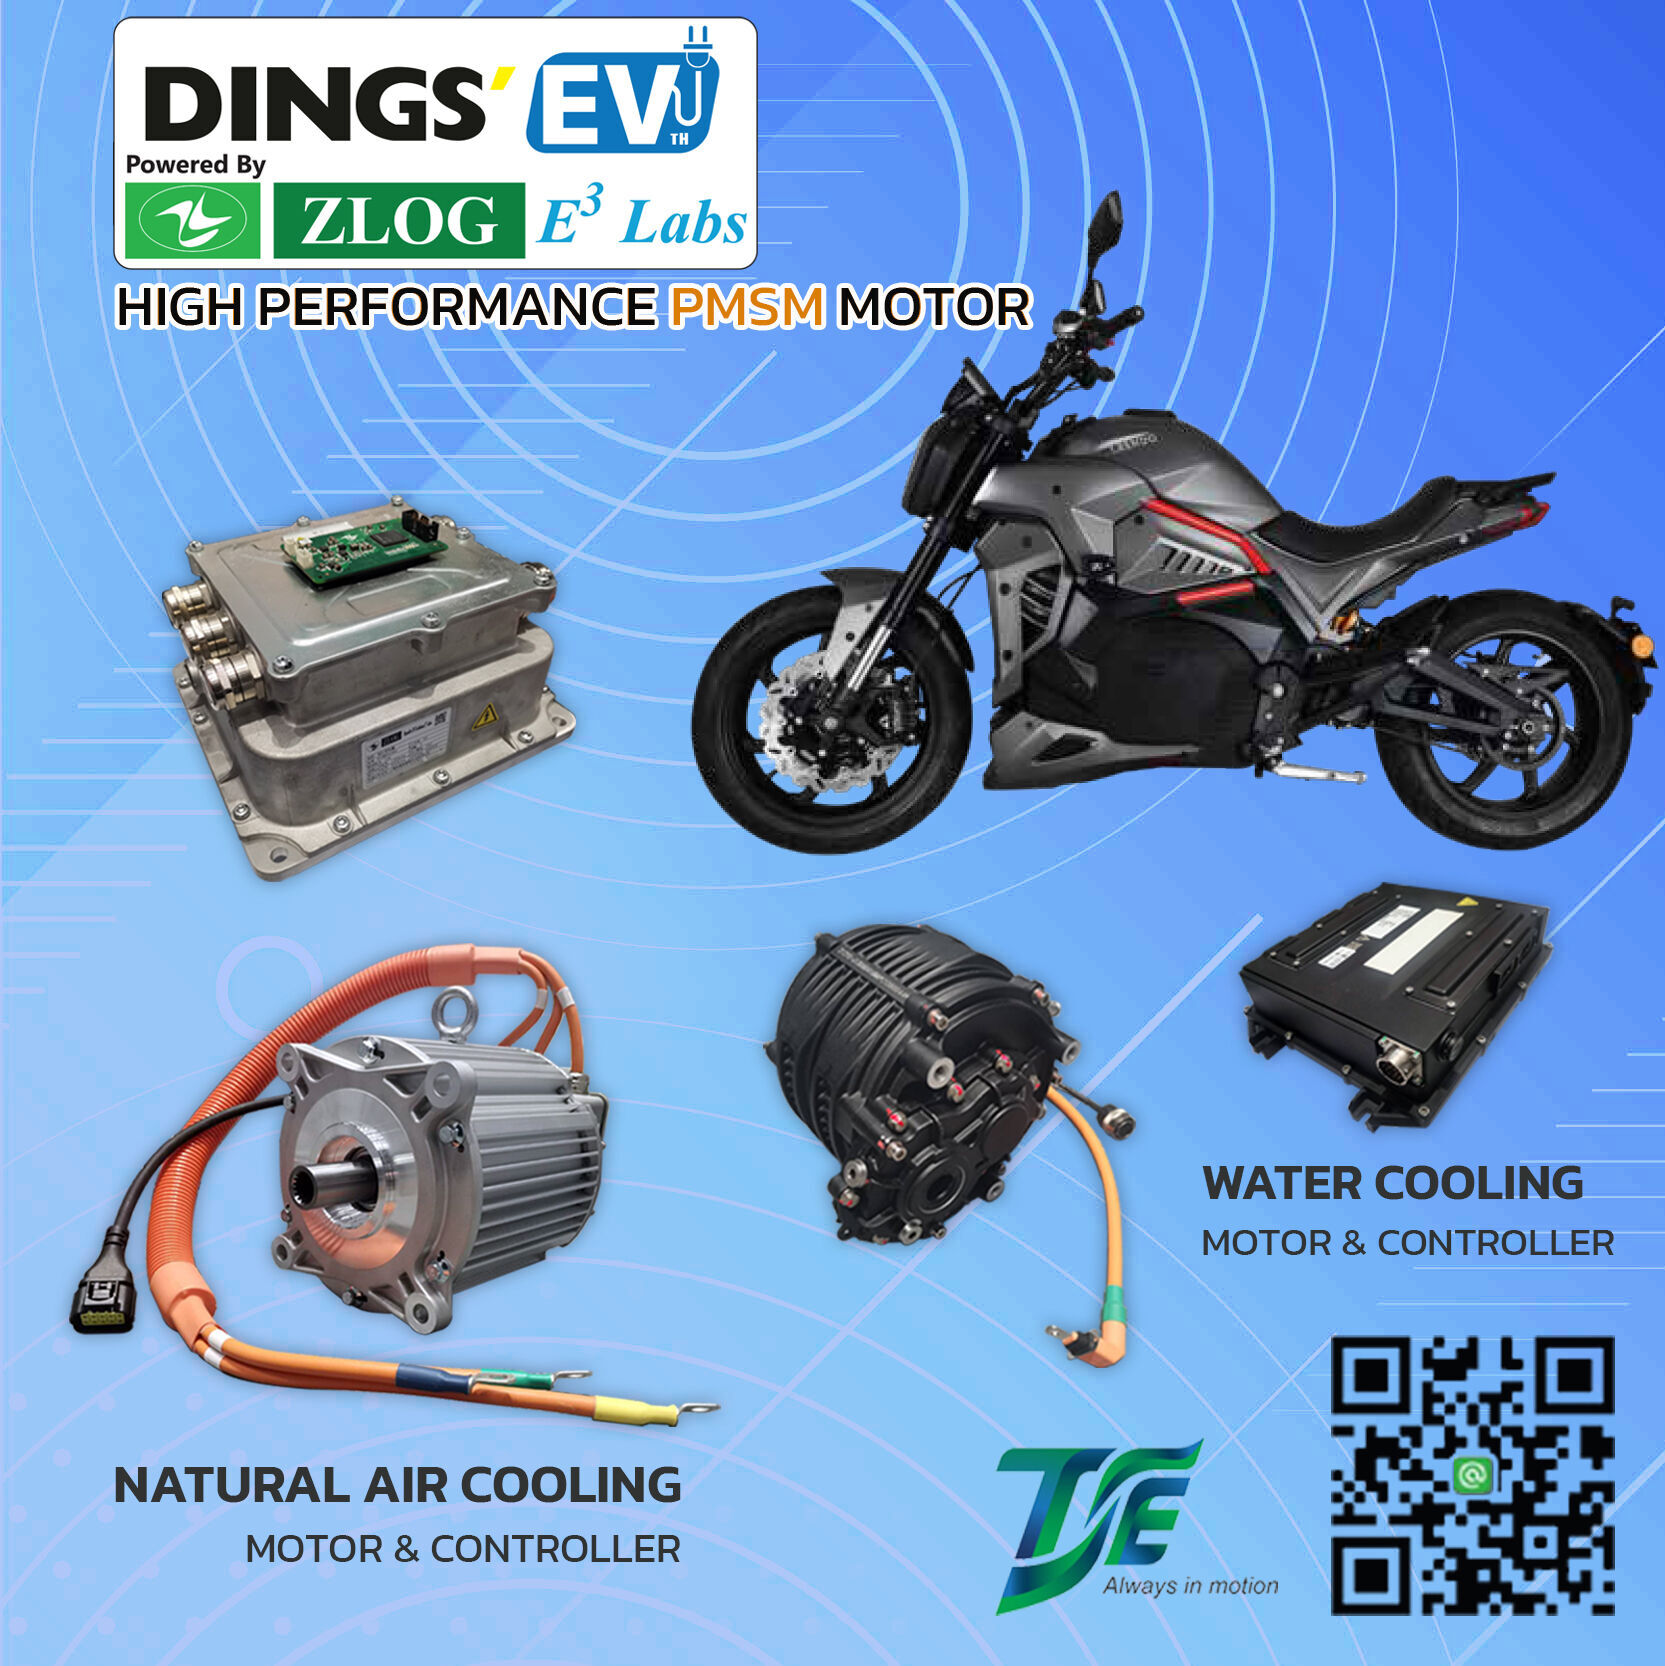 Dings' EVHigh Performance PMSM MotorNatural Air CoolingWater CoolingMotor & Controller